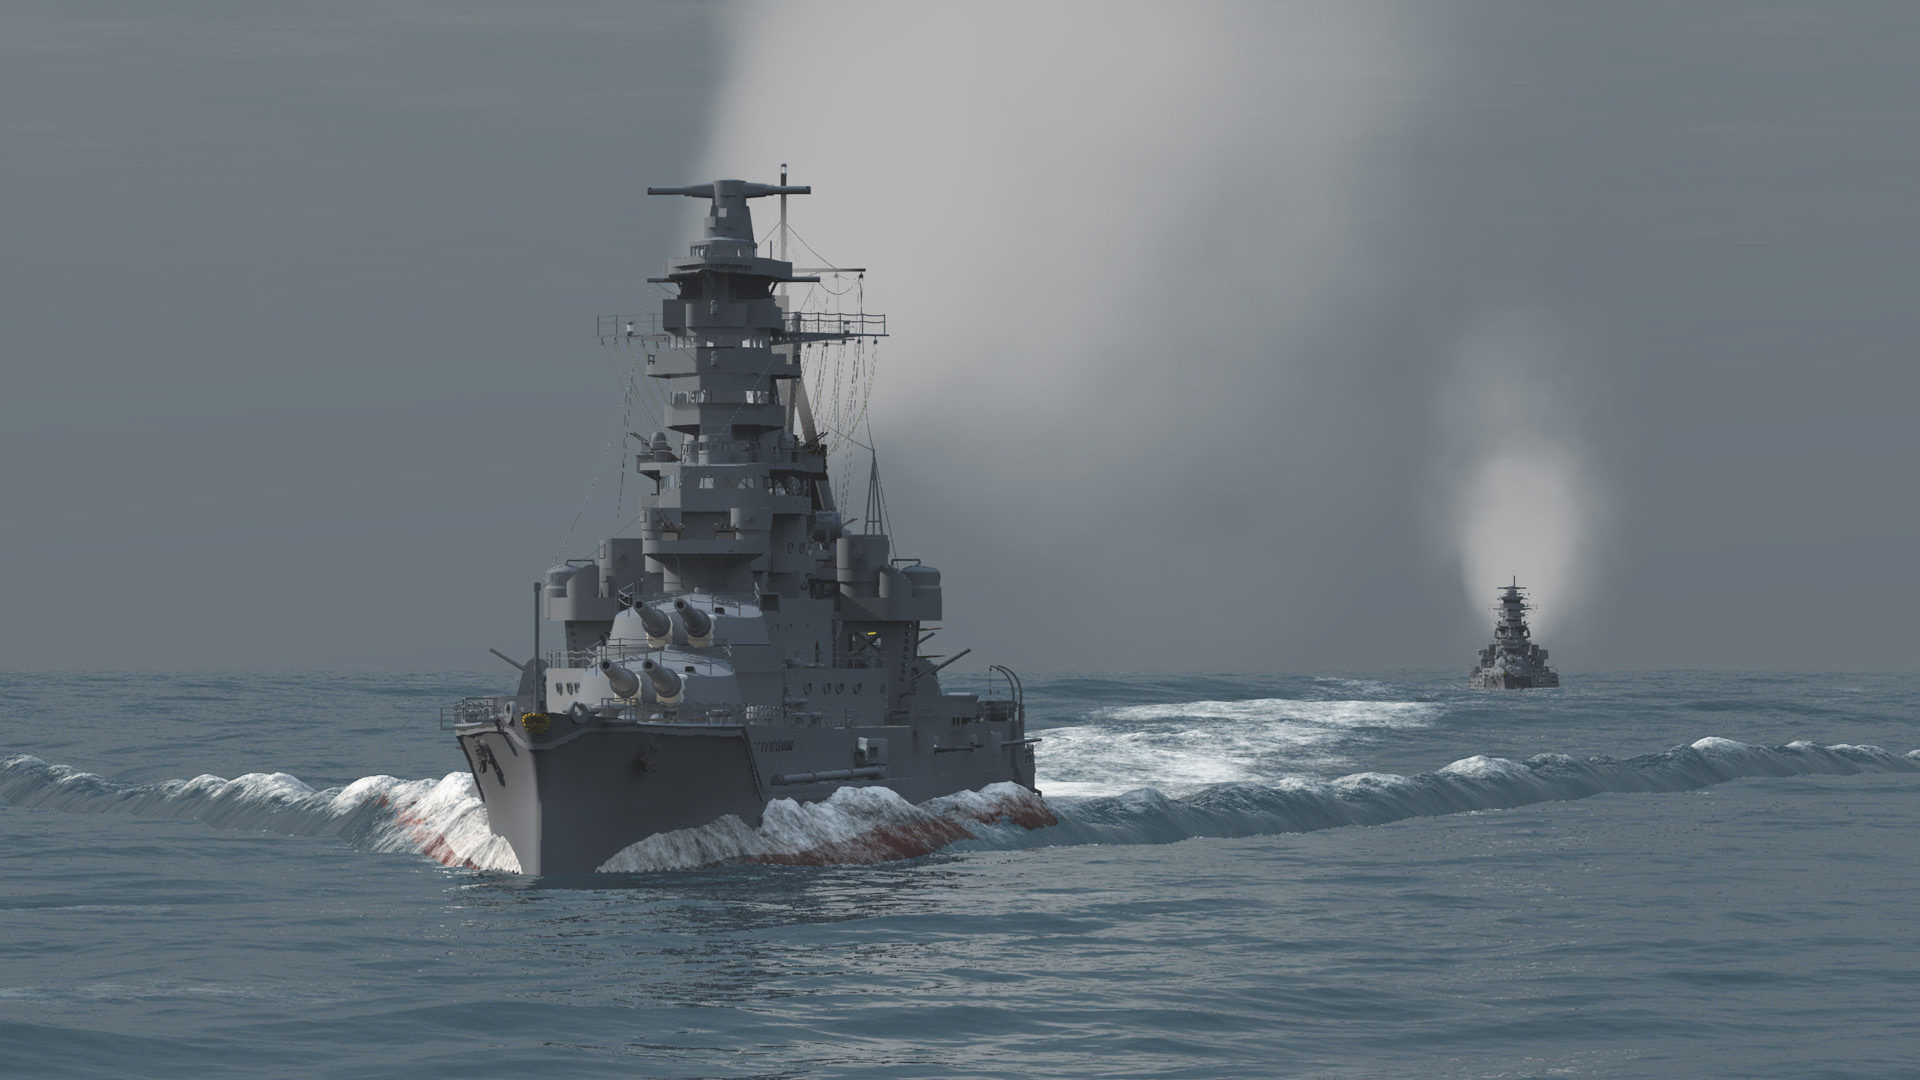 Japanese Battleship Haruna Wallpapers